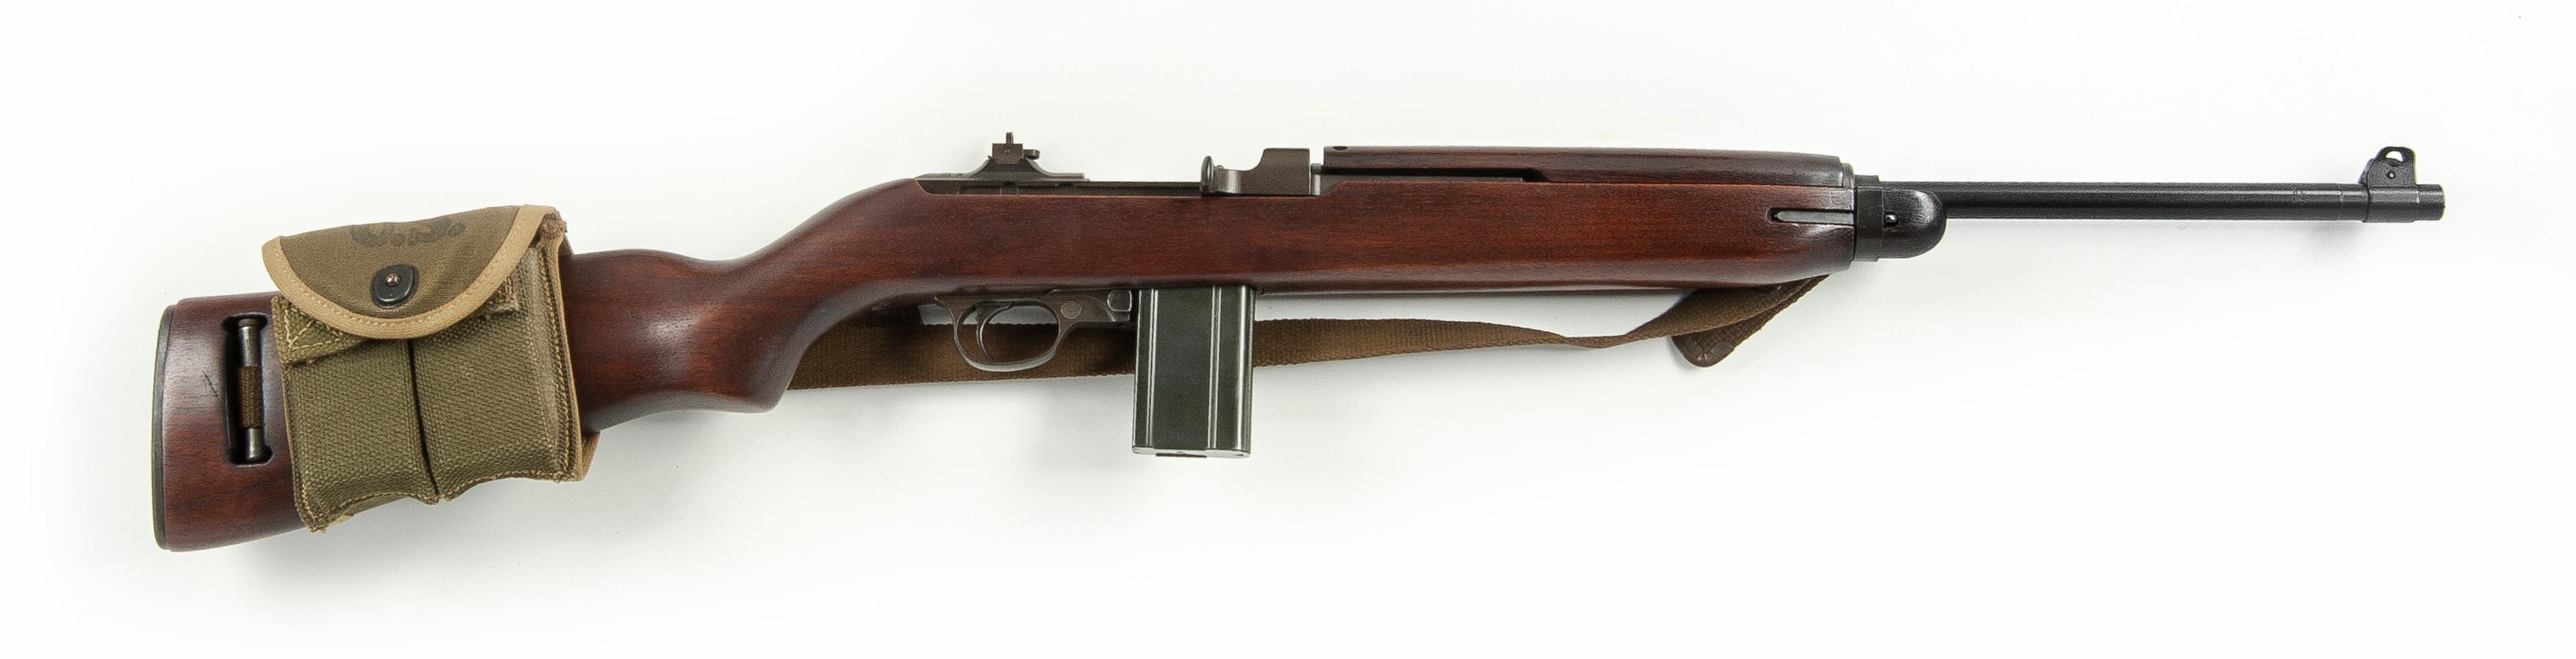 U. S. Carbine, M1 by Inland